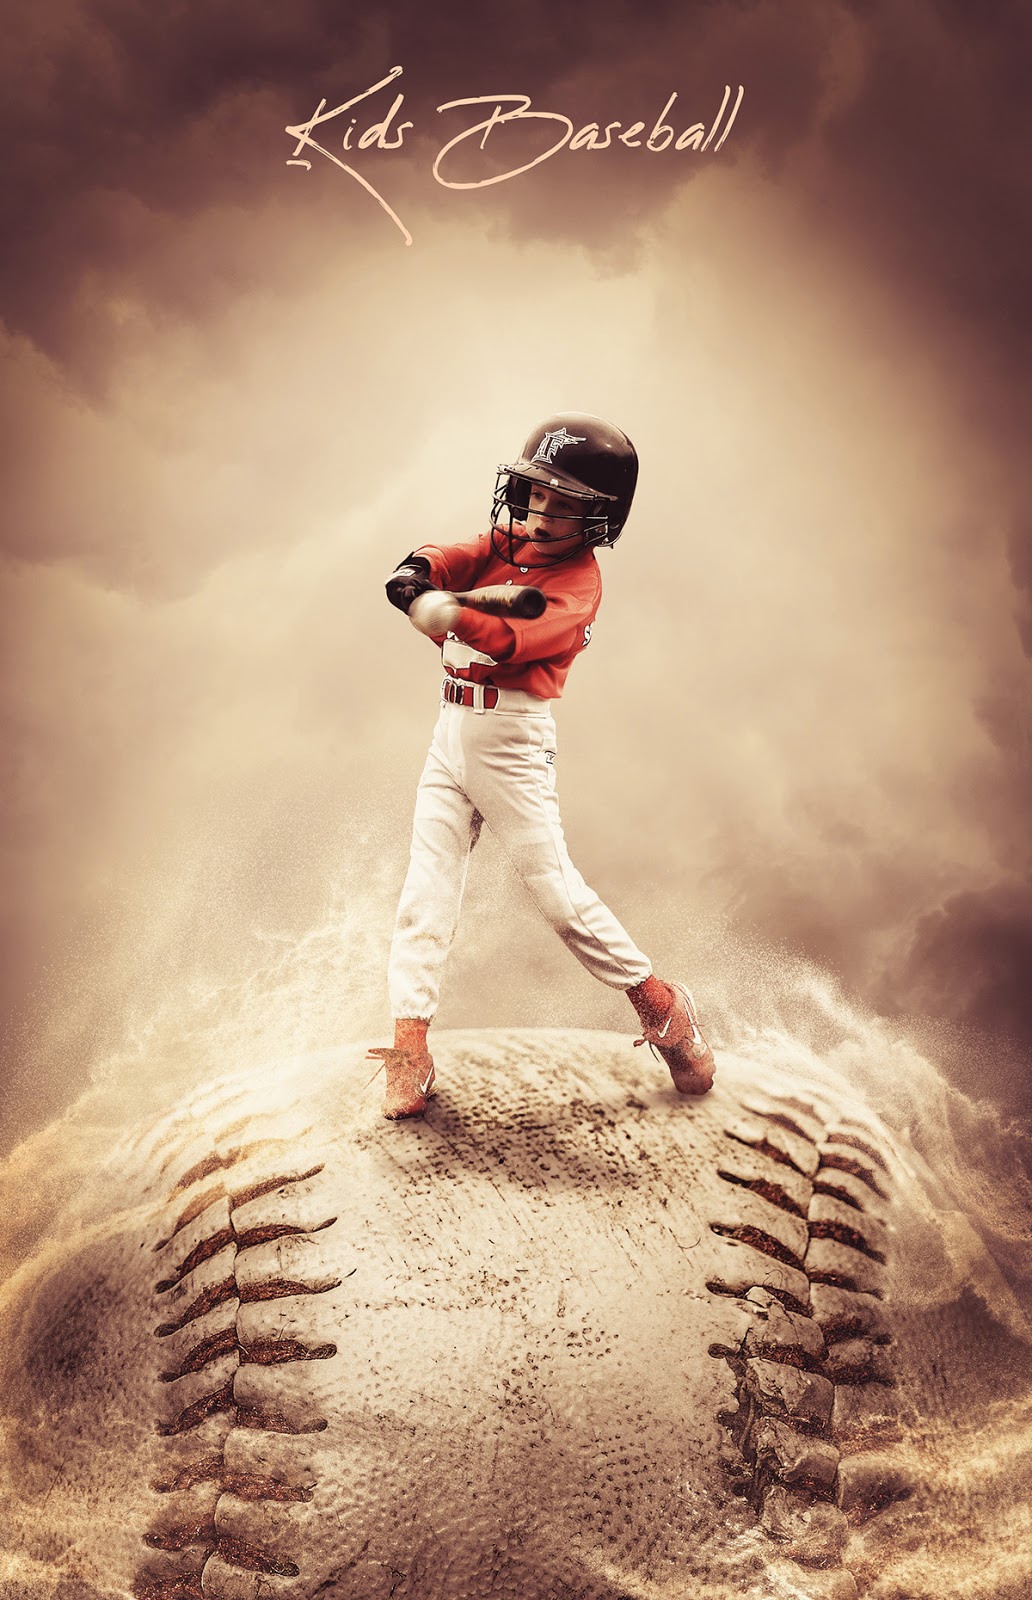 Kids Baseball - Photoshop Manipulation Tutorial